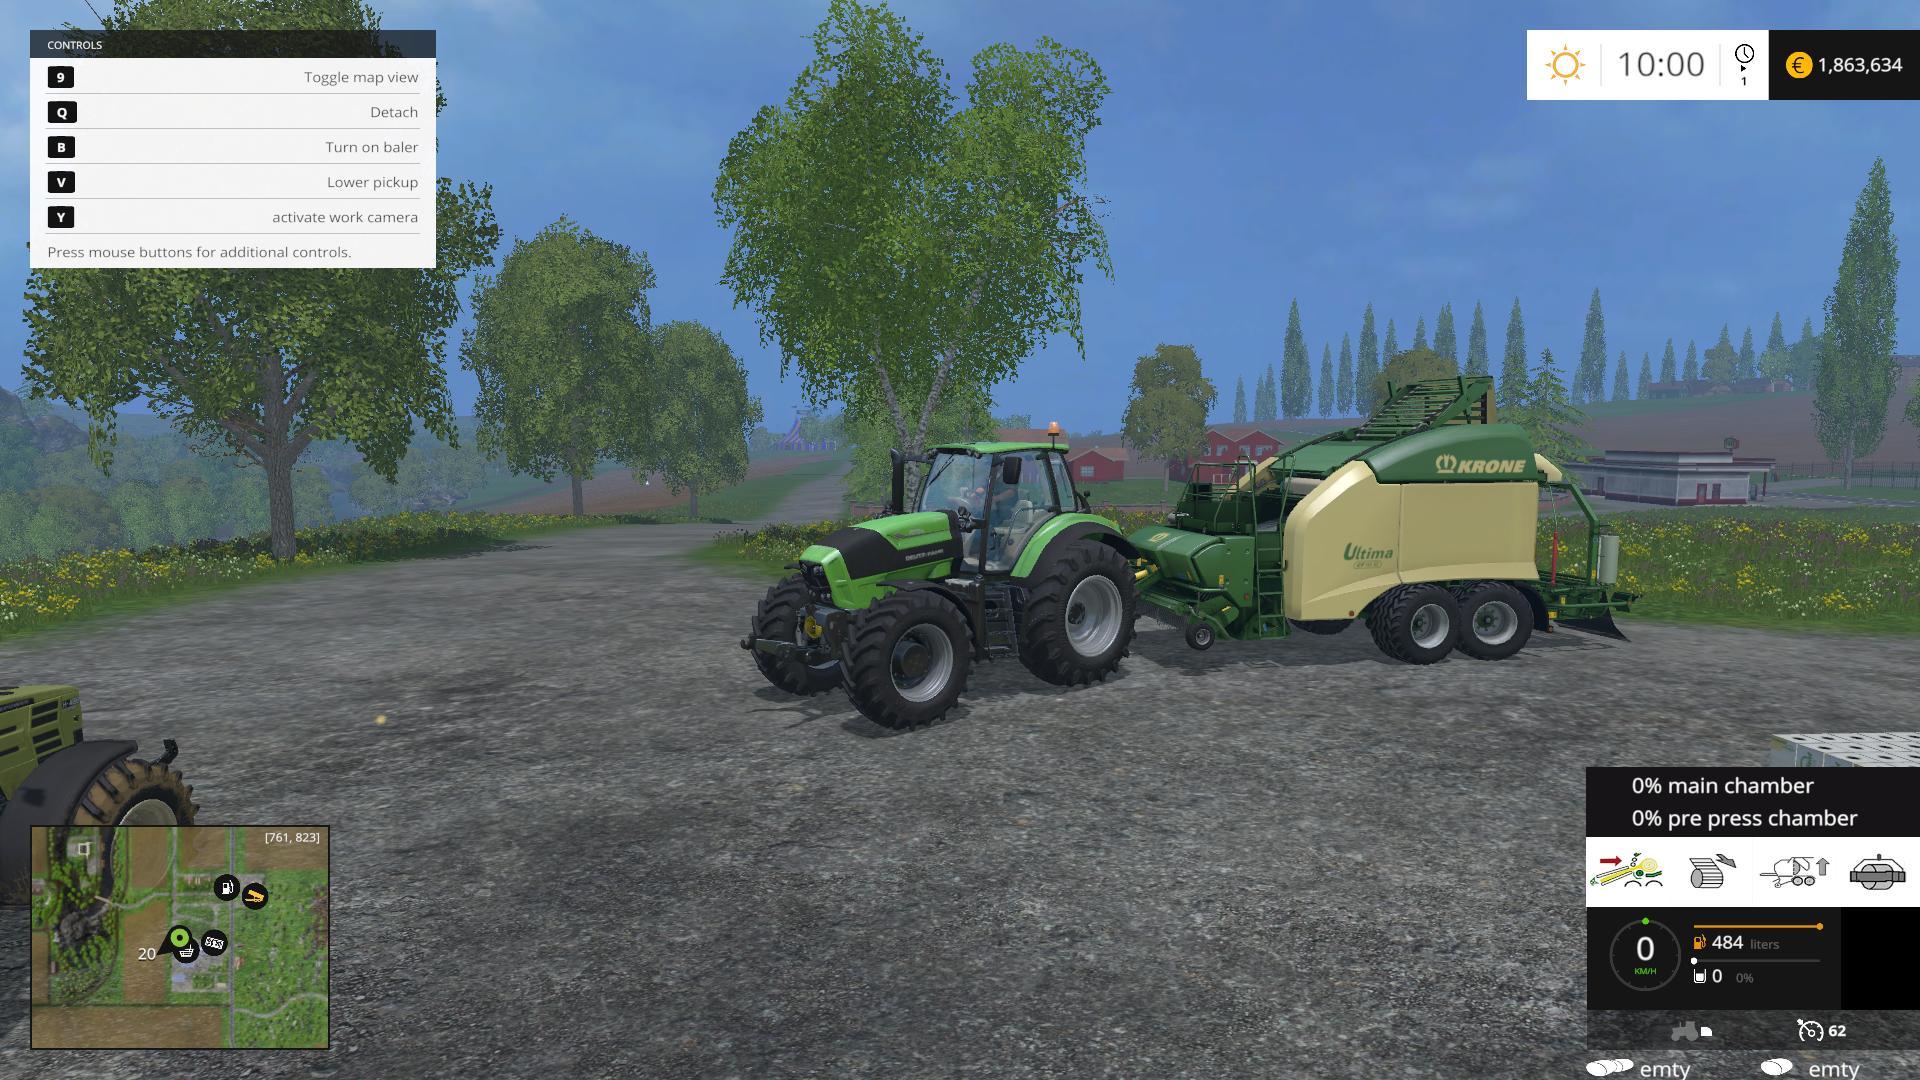 Krone Ultima Cf 155 Xc • Farming Simulator 19 17 22 Mods Fs19 17 22 Mods 8166